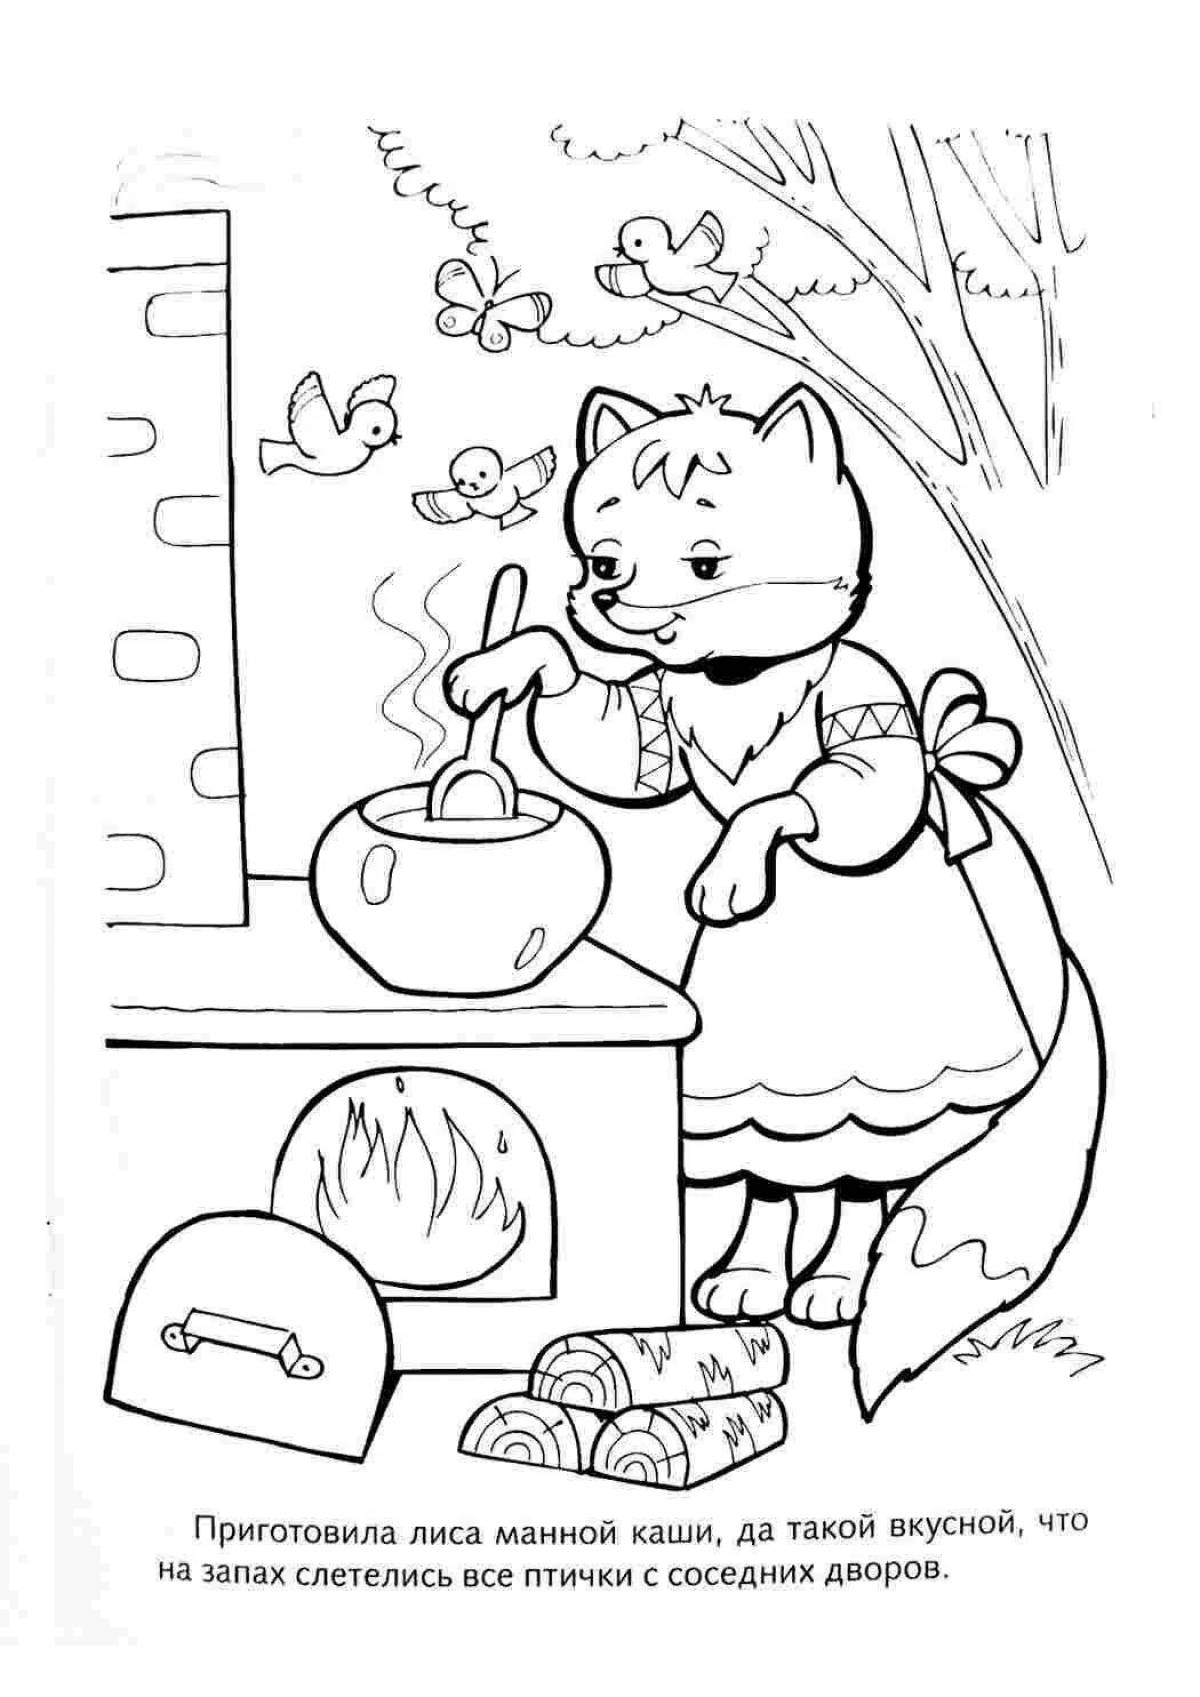 Serene fox and jug coloring page